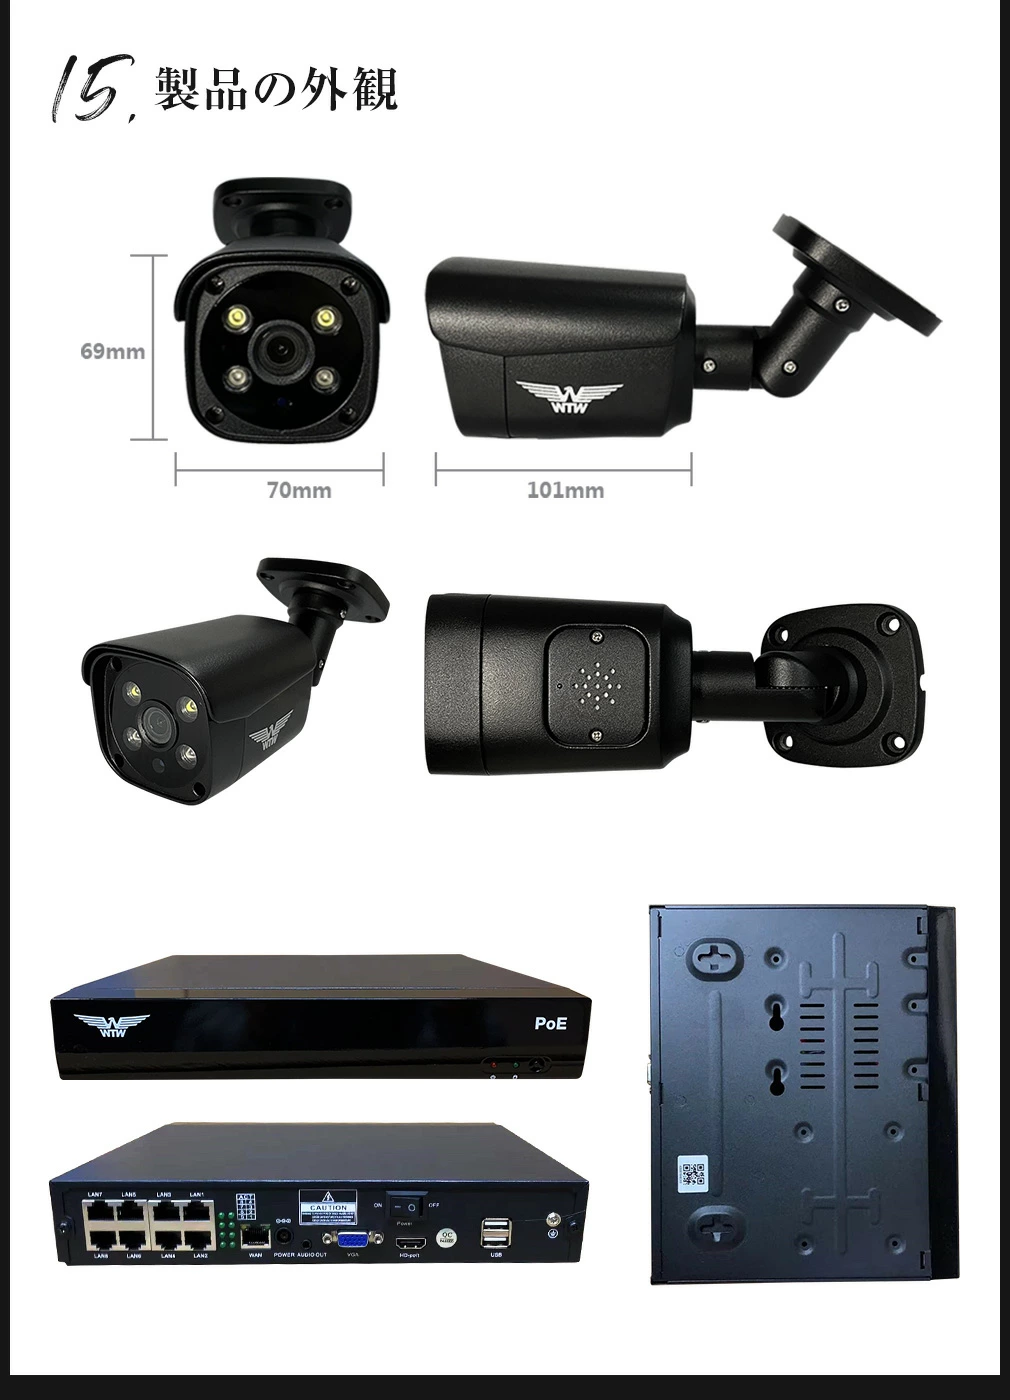 WTW塚本無線の XPOE 防犯カメラセット。設置が簡単なワンケーブル屋外防雨仕様カラーカメラセット ケーブル1本で電源と映像を接続出来ますので設置工事が楽です。 